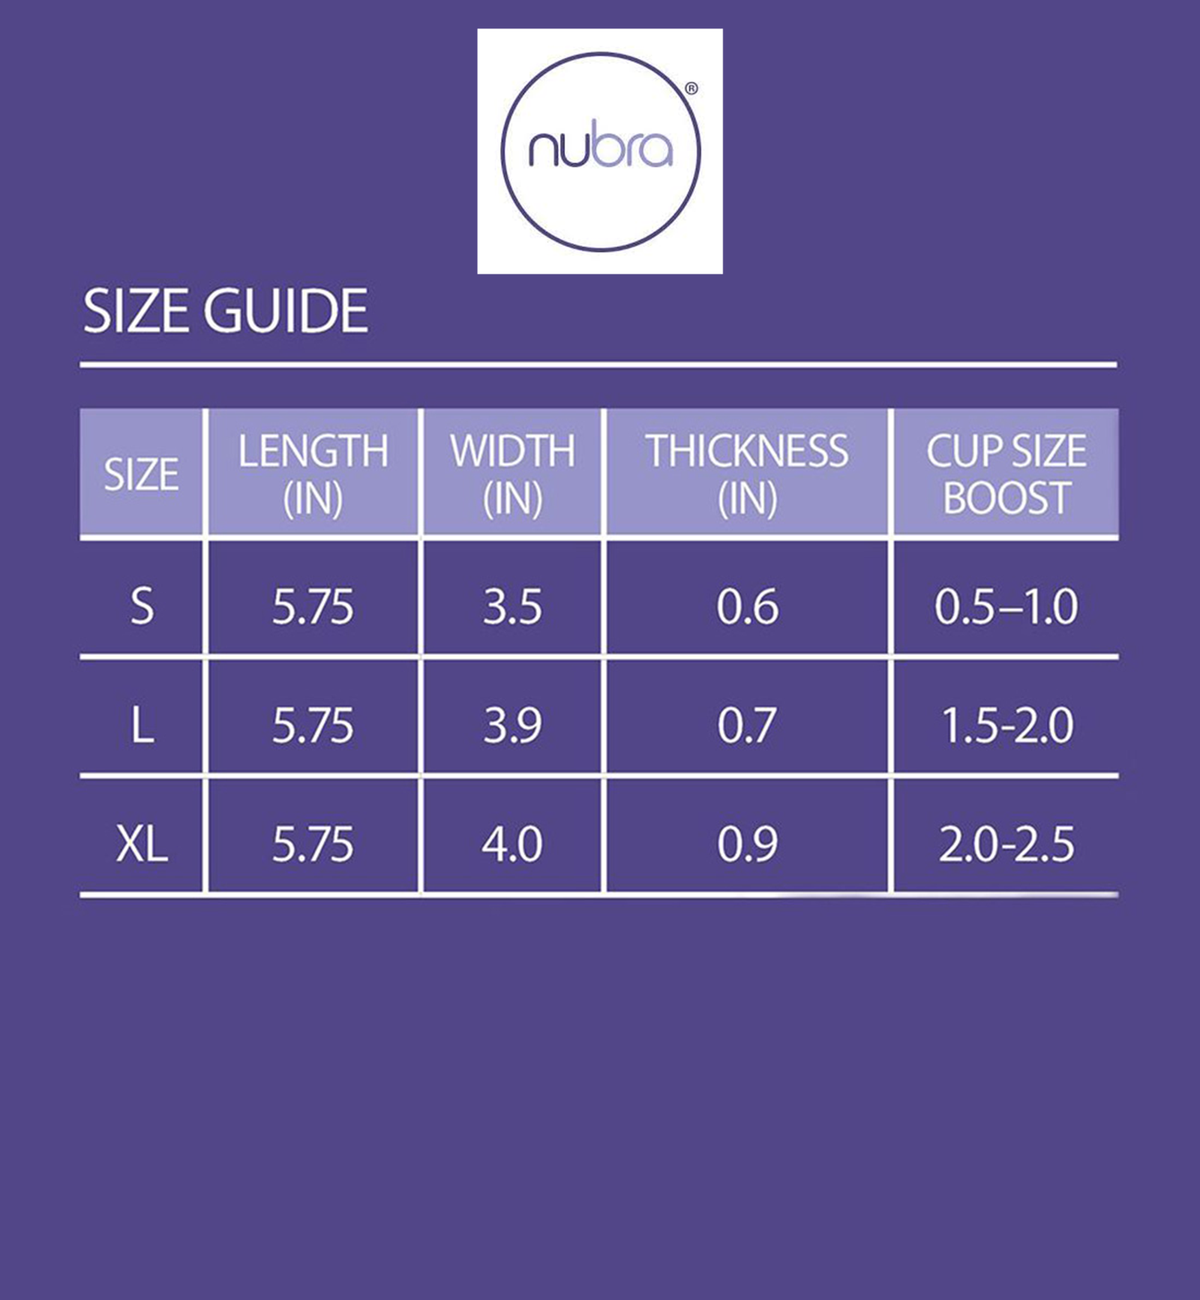 NuBra Non-Adhesive Silicon Size Enhancer w/ Nipples (B106),Small,Nude - Nude,Small